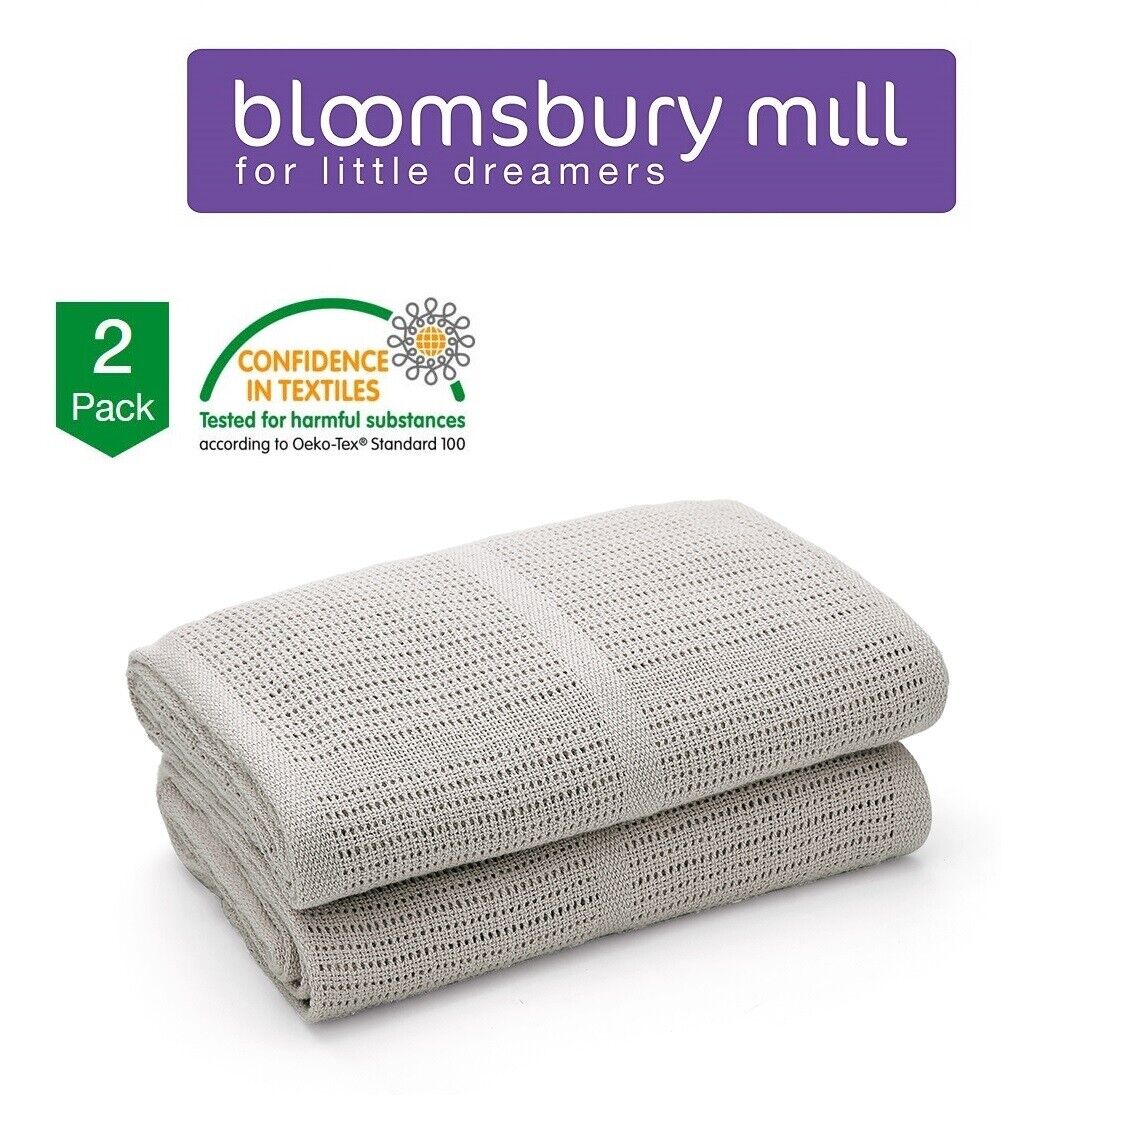 Soft newborn 100% Organic Cotton Cellular Baby Blanket Breathable - Grey 2 Pack 